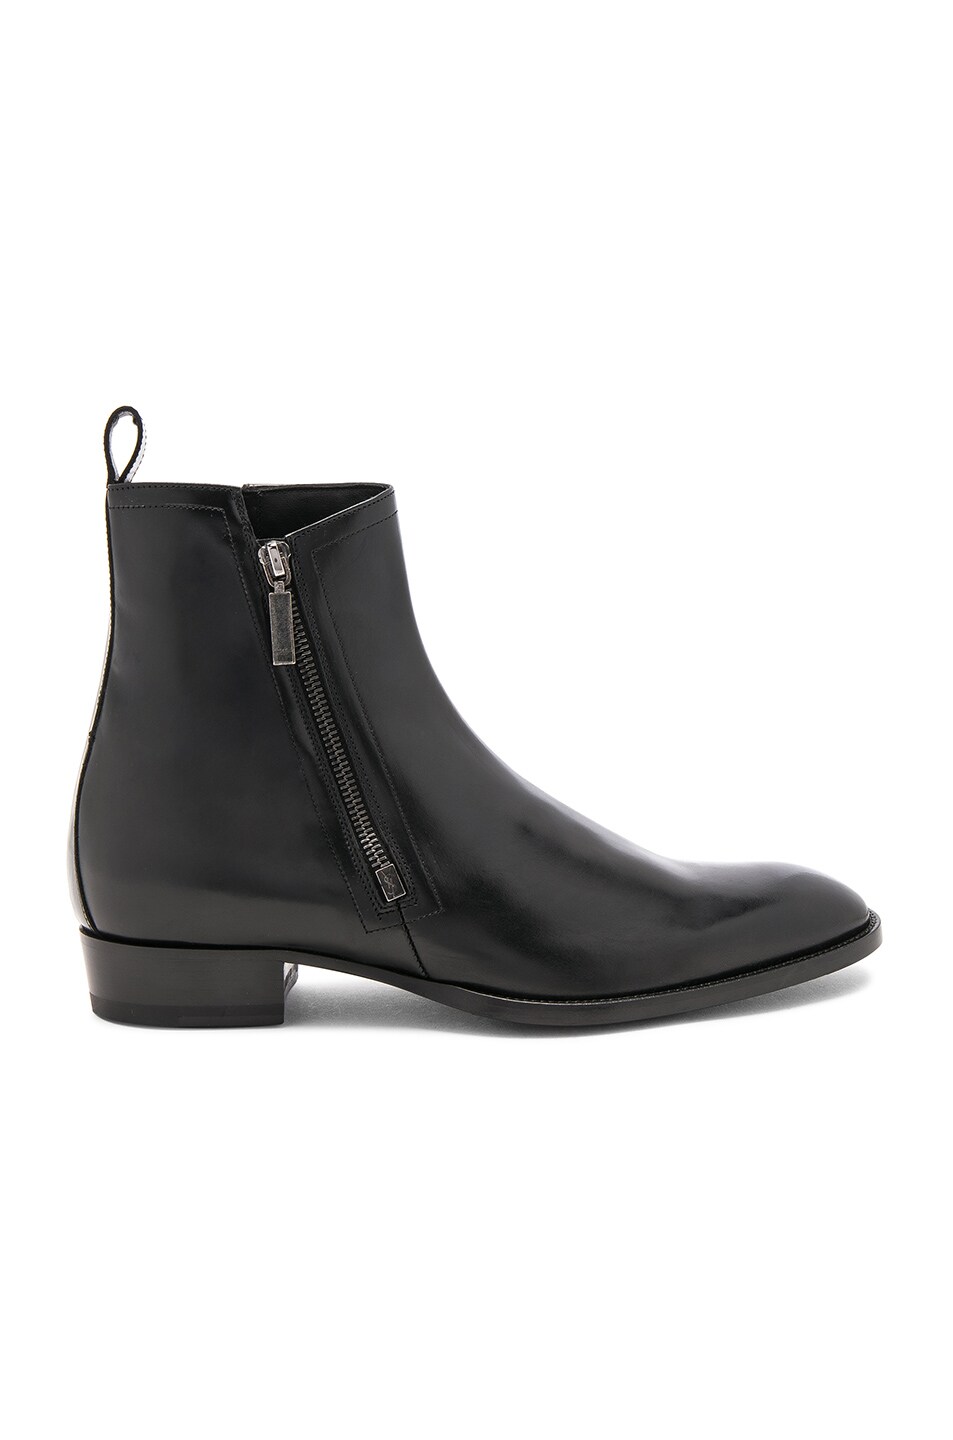 SAINT LAURENT Wyatt 30 Side-Zip Leather Ankle Boot, Black | ModeSens